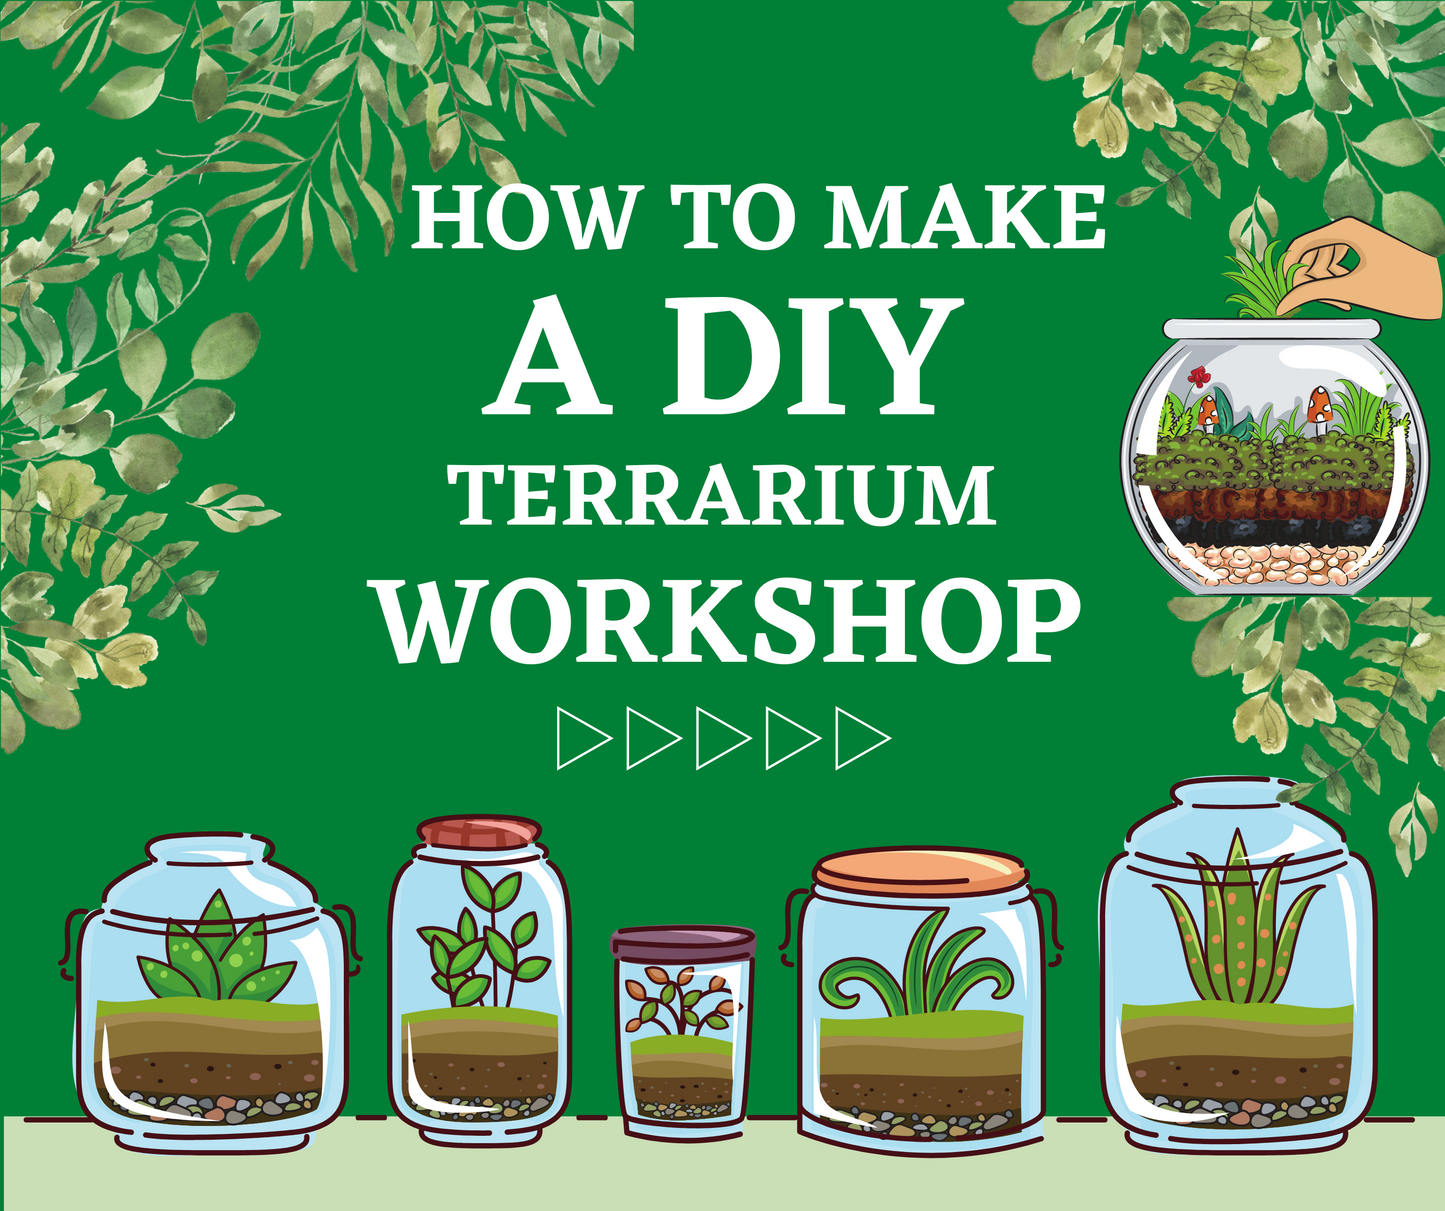 Red's Terrarium Workshop • May 18, Saturday • 1pm-3pm